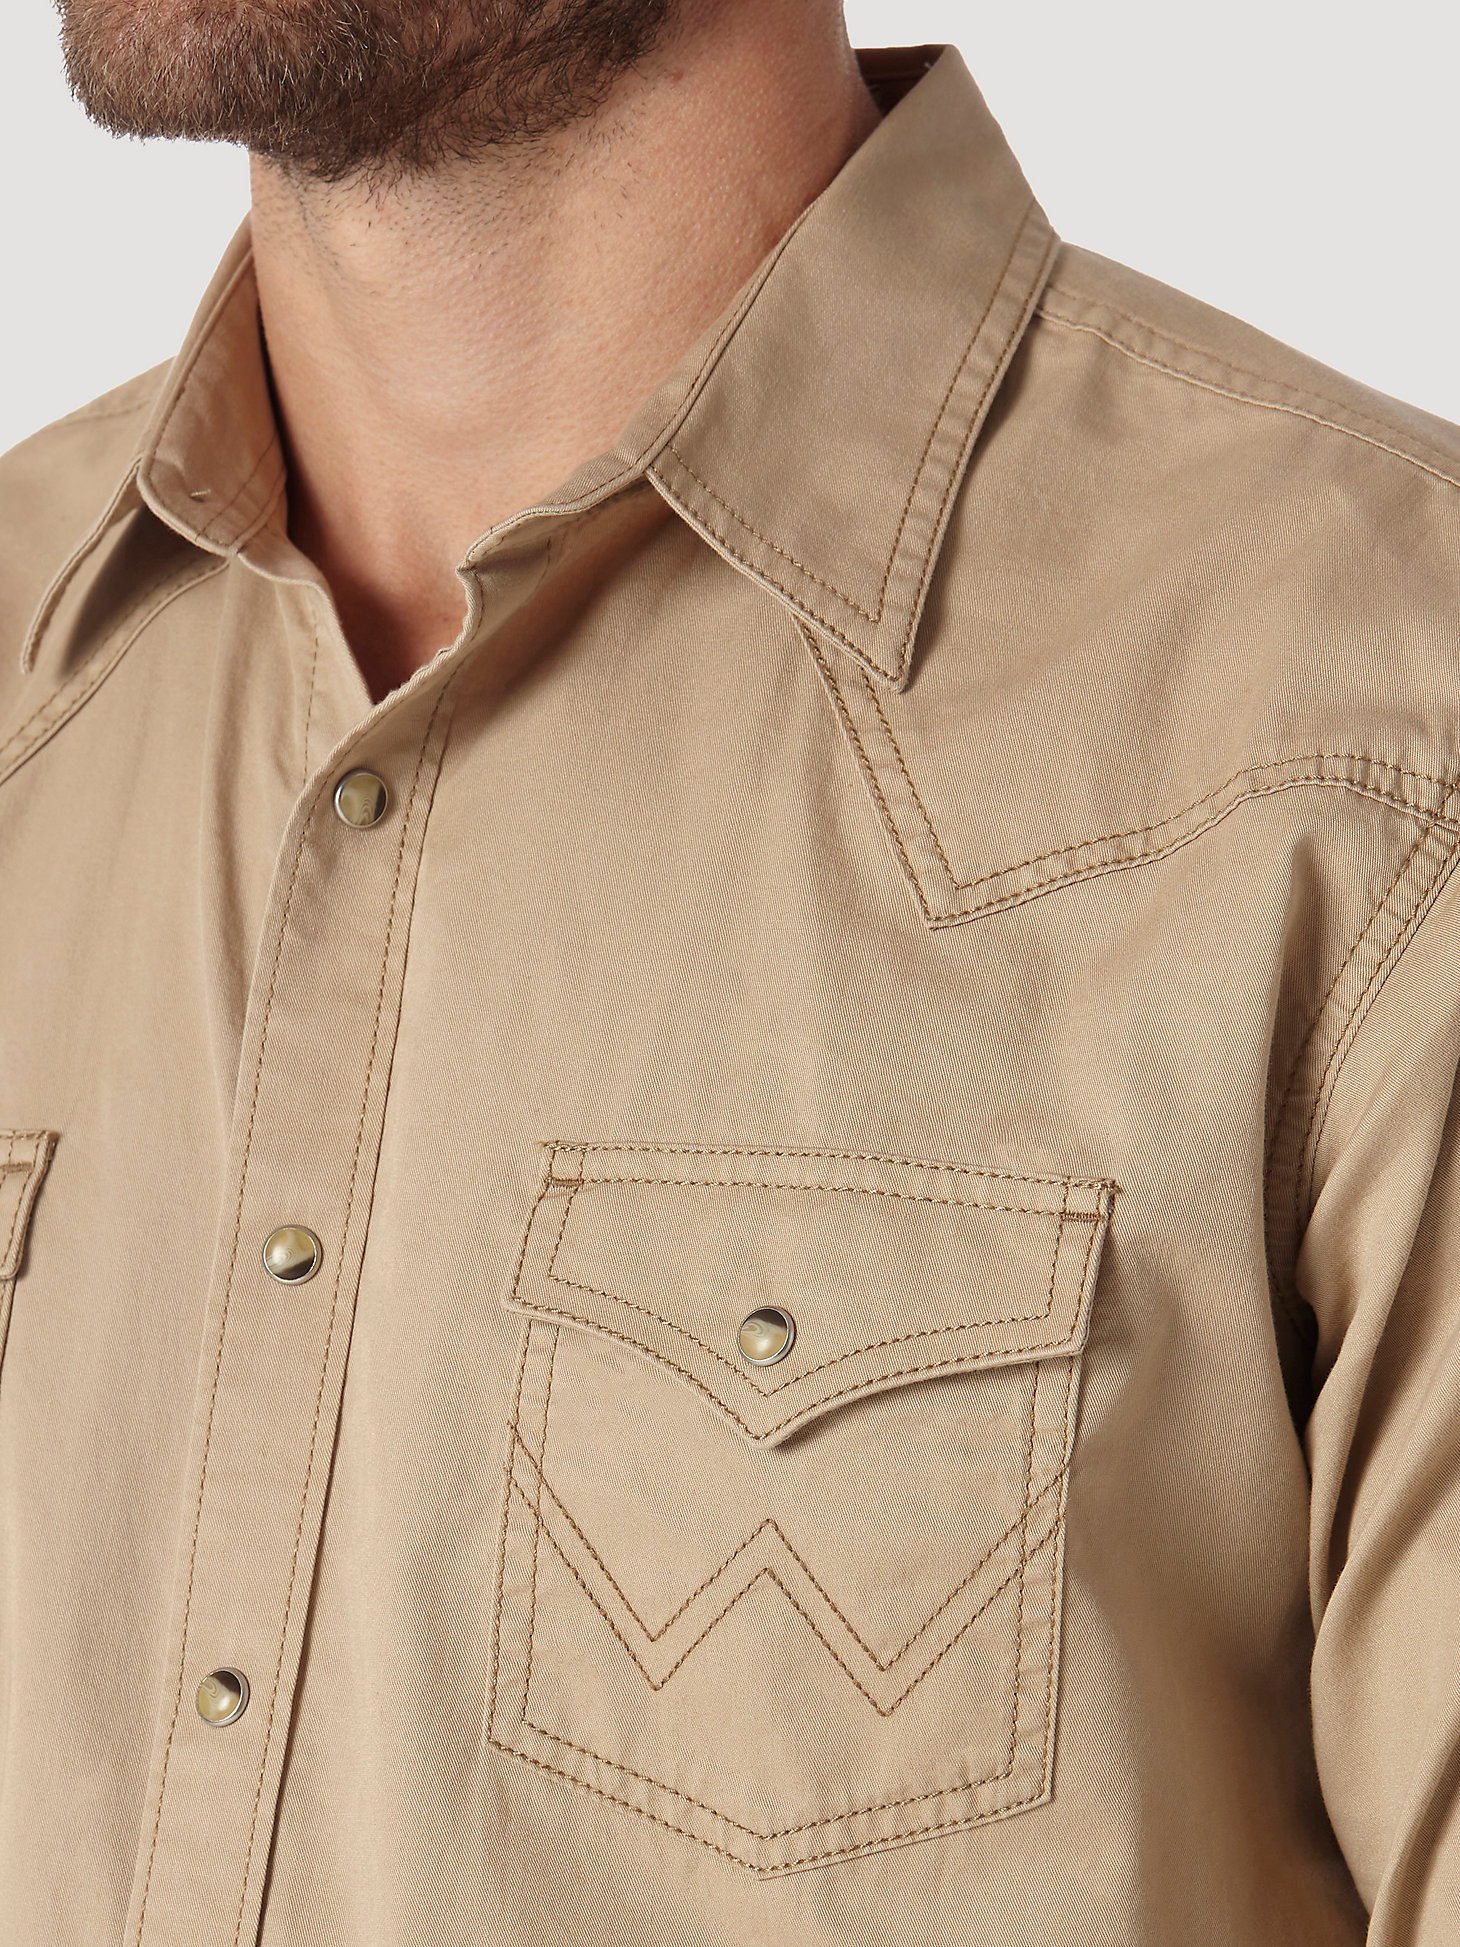 Men's Wrangler® Contrast Trim Western Two Snap Flap Pocket Shirt in Tan alternative view 3